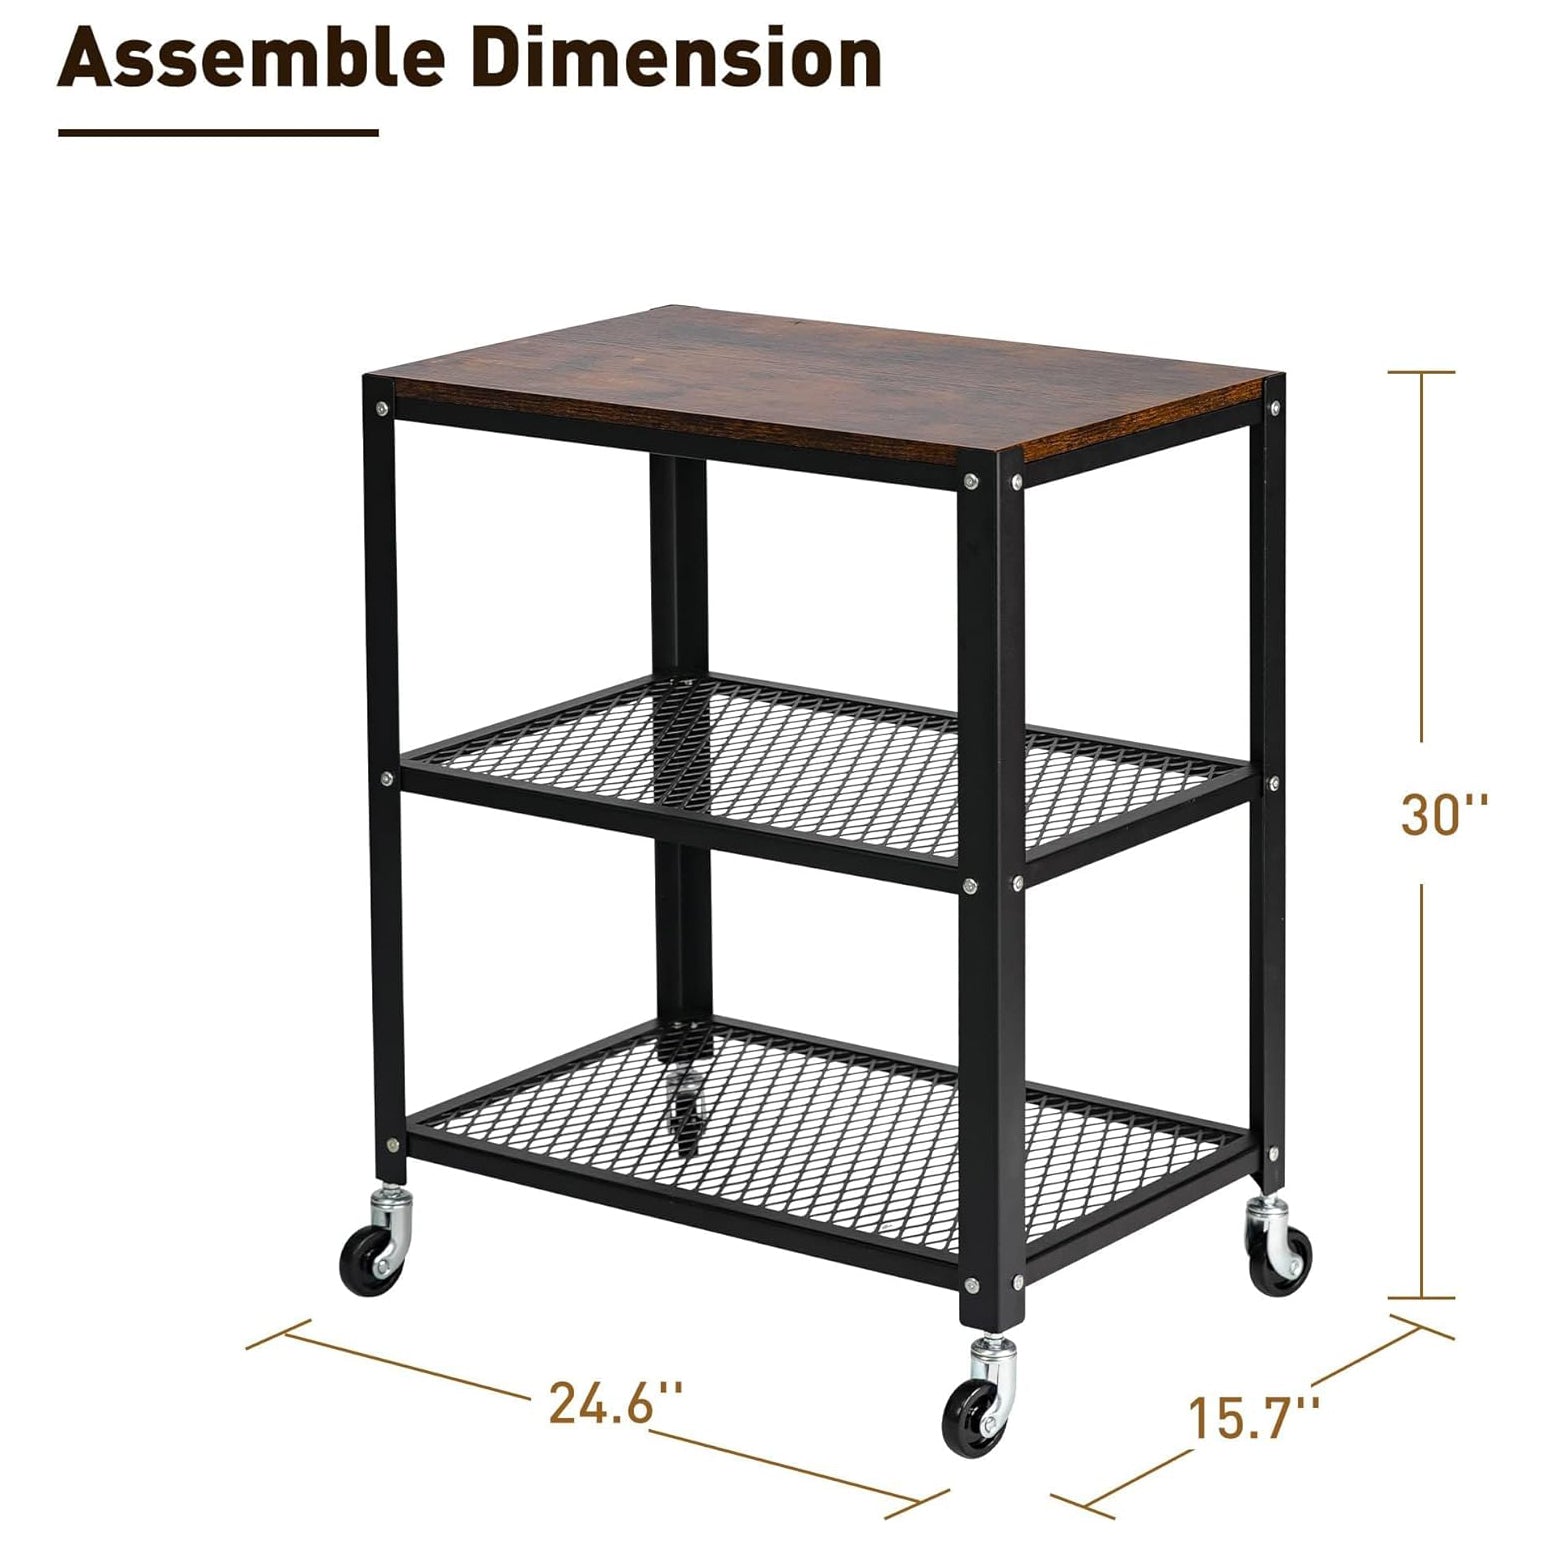 3-Tier Modern Style Storage Rack with Wheels - Steel Movable Storage Shelf and Display Rack in Black/Brown